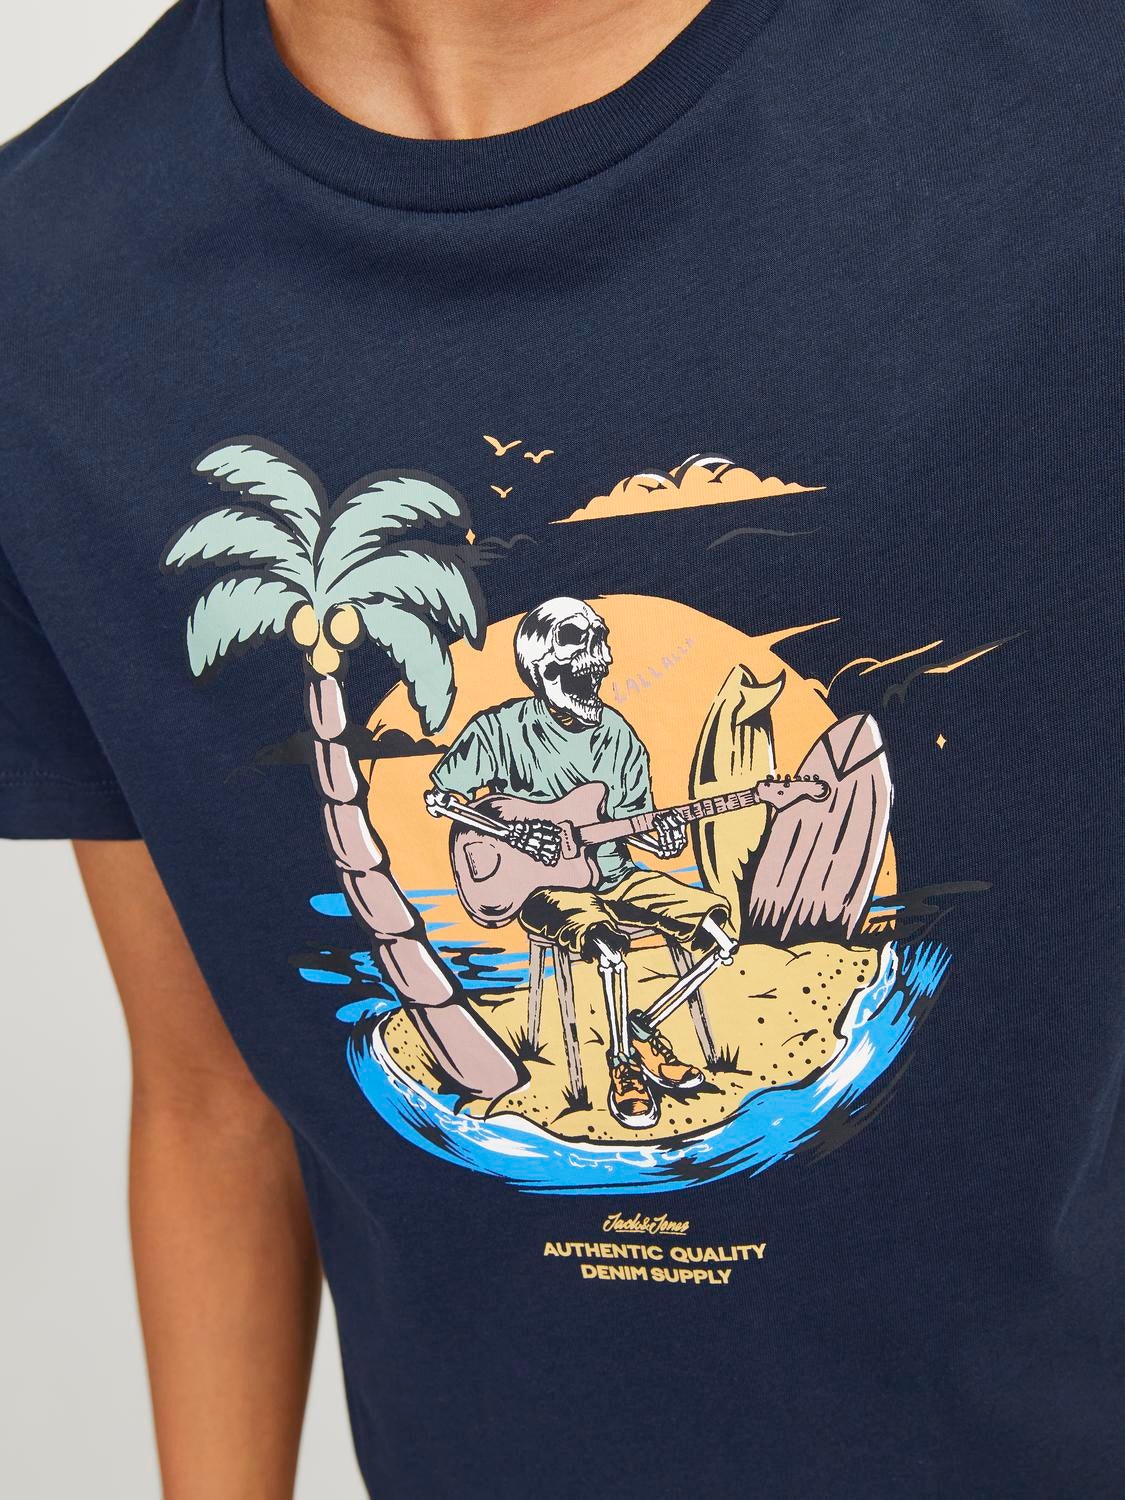 Jack & Jones Printed T-shirt For boys -Navy Blazer - 12249732